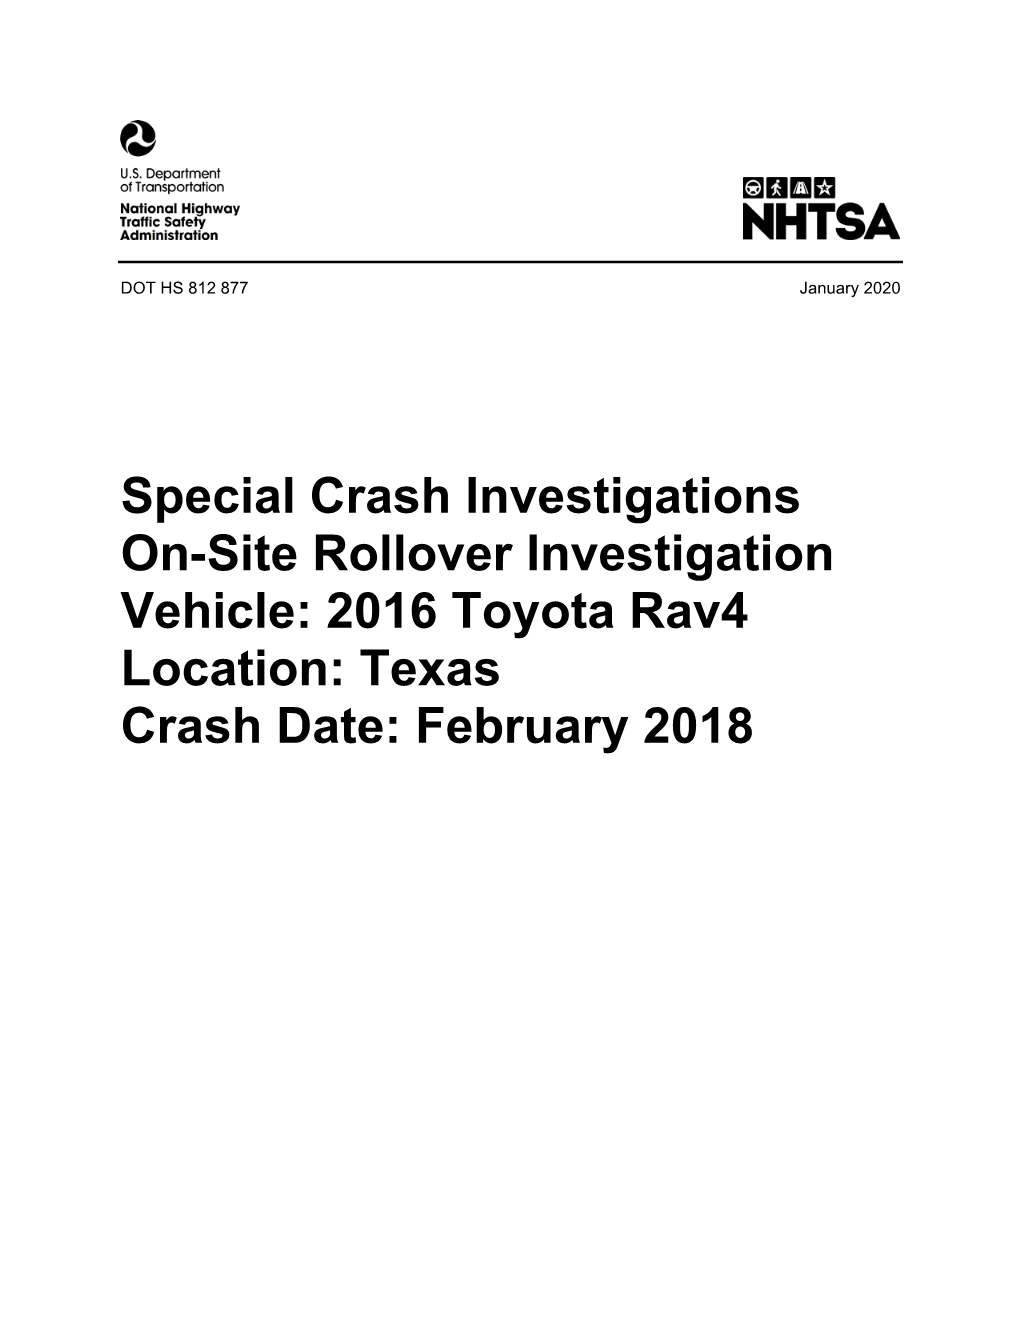 On-Site Rollover Investigation; Vehicle: 2016 Toyota Rav4; Location: Texas; Crash Date: February 2018 (Report No